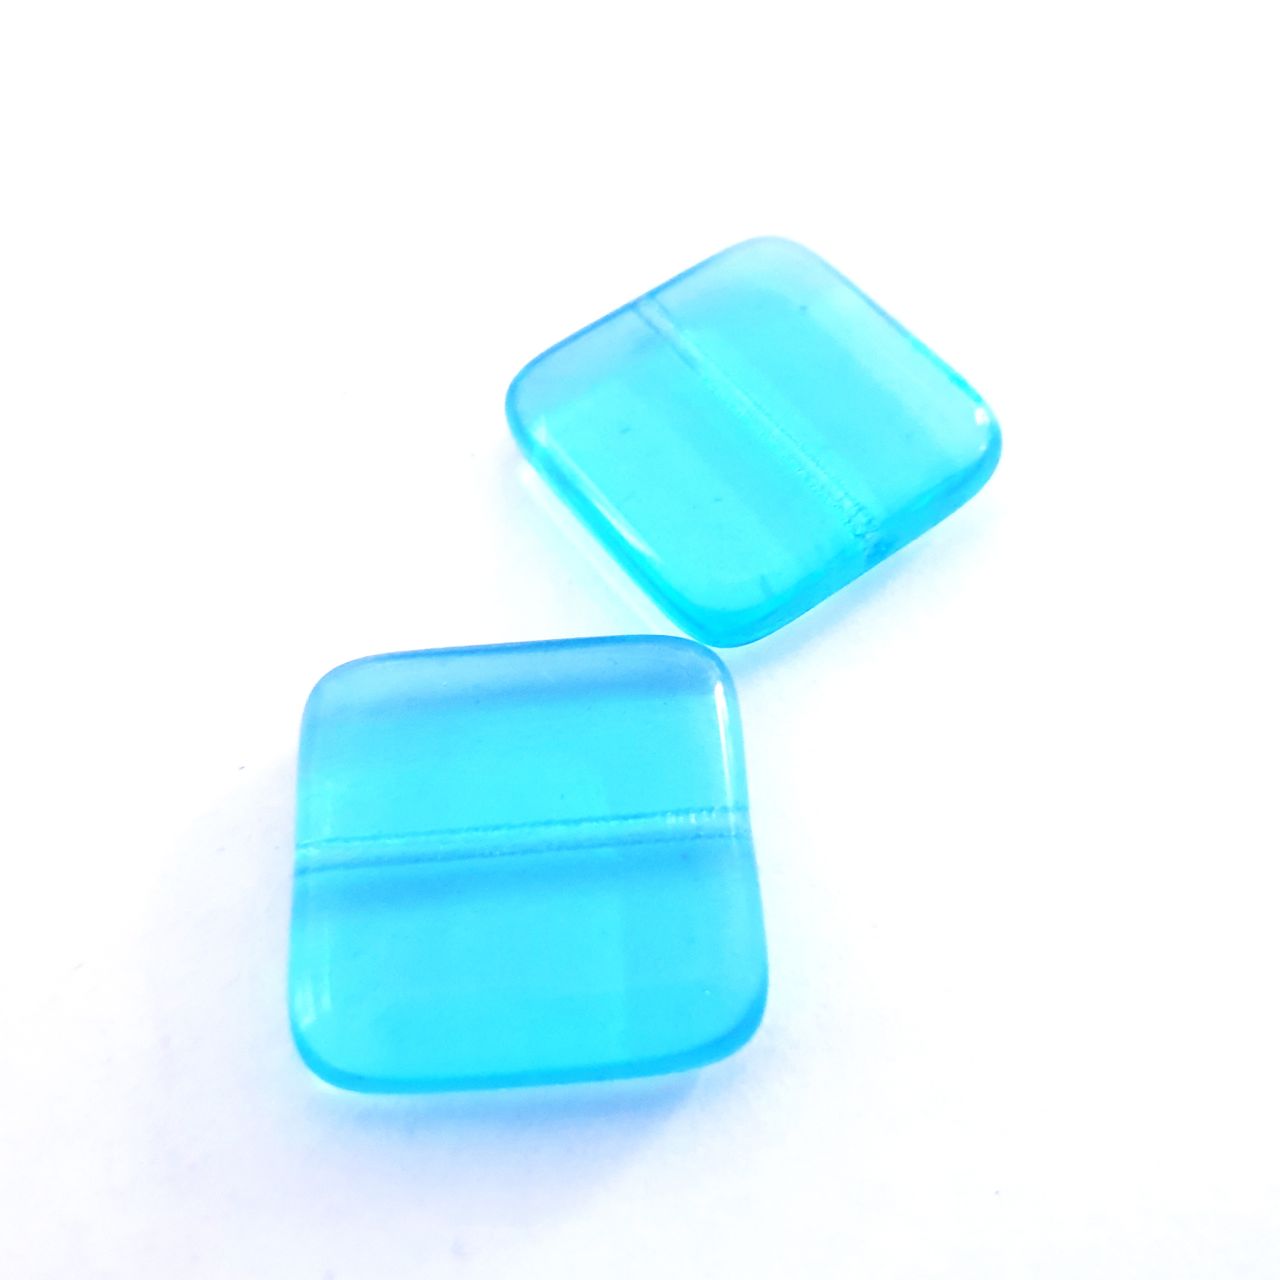 Square 20mm Aquamarine Transparent Czech Glass Bead